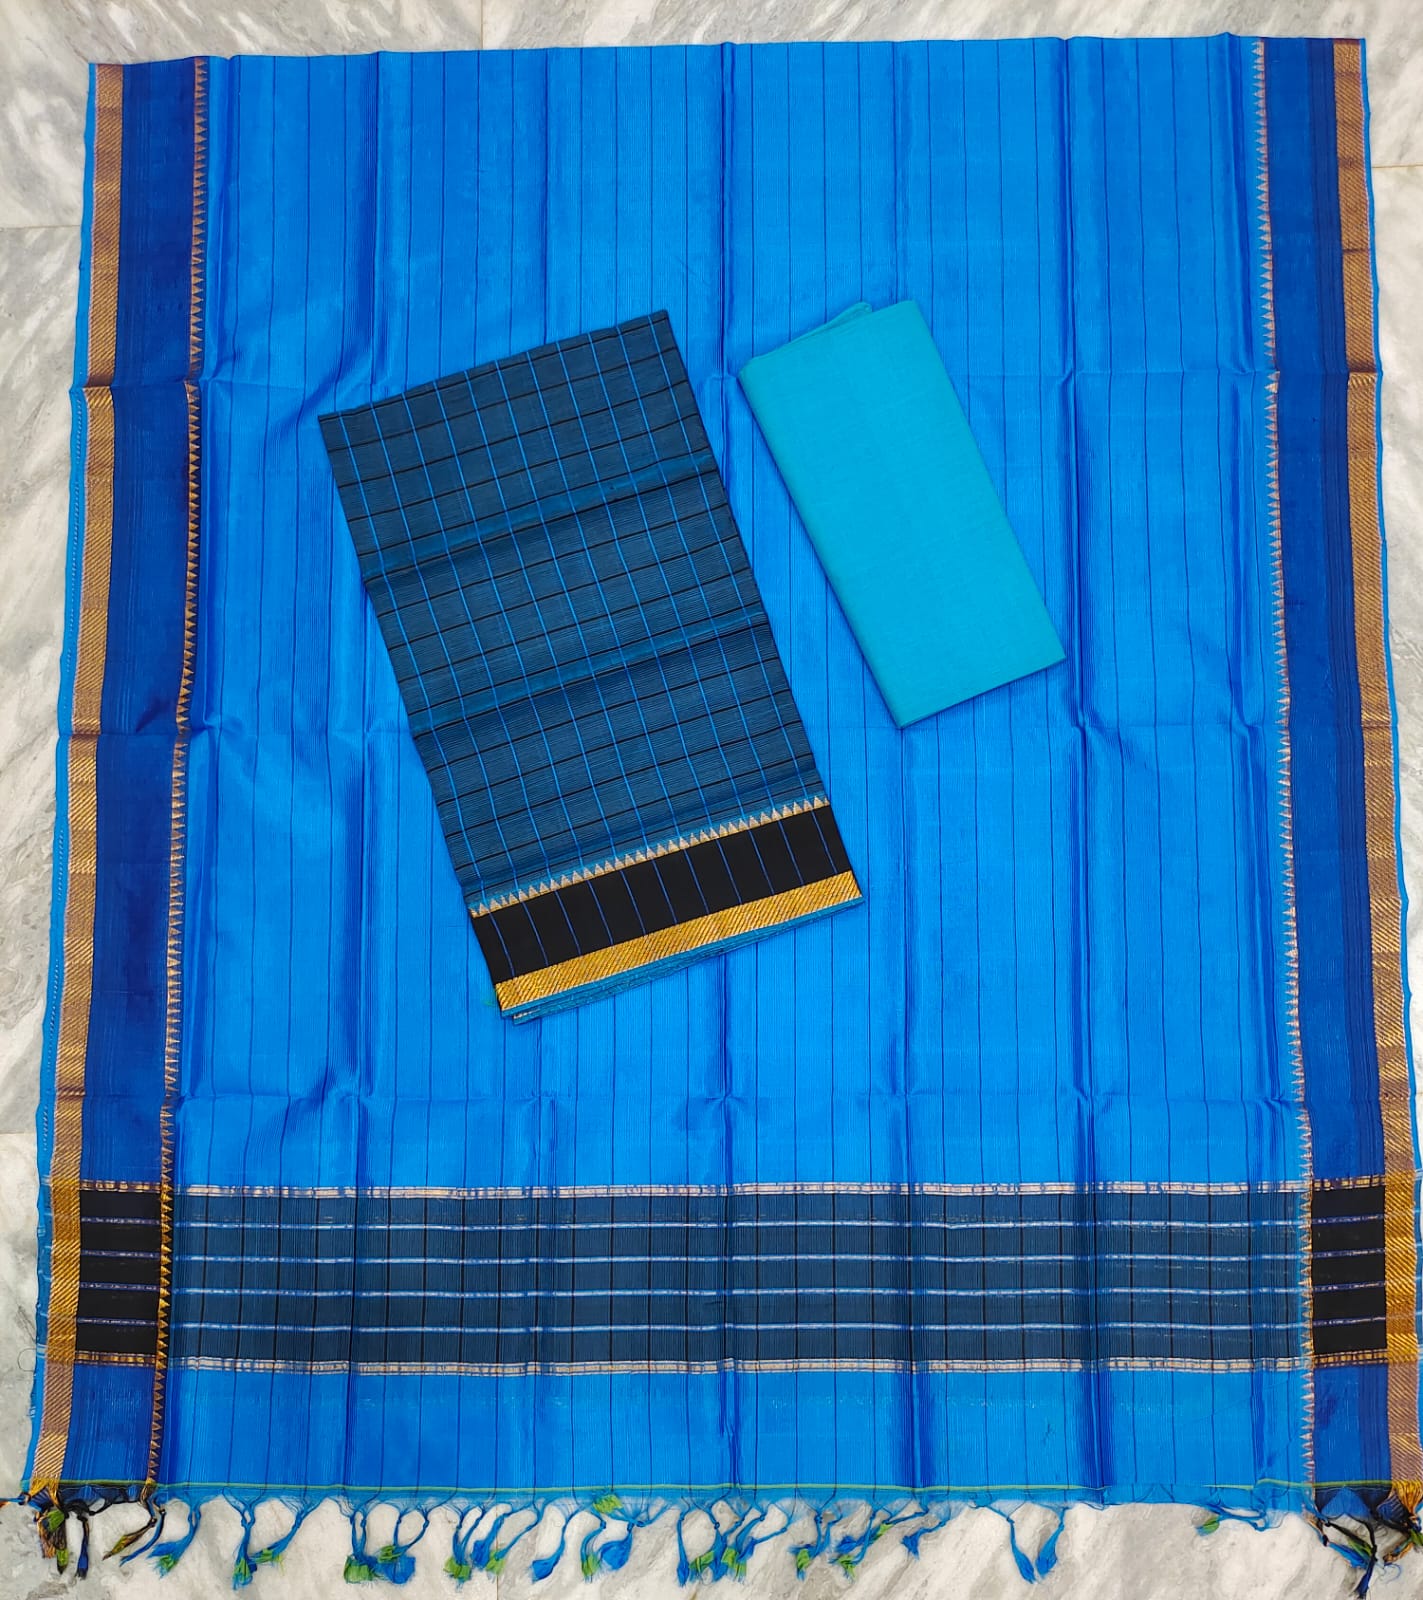 Mangalagiri pattu stripes dress material set (unstitched)